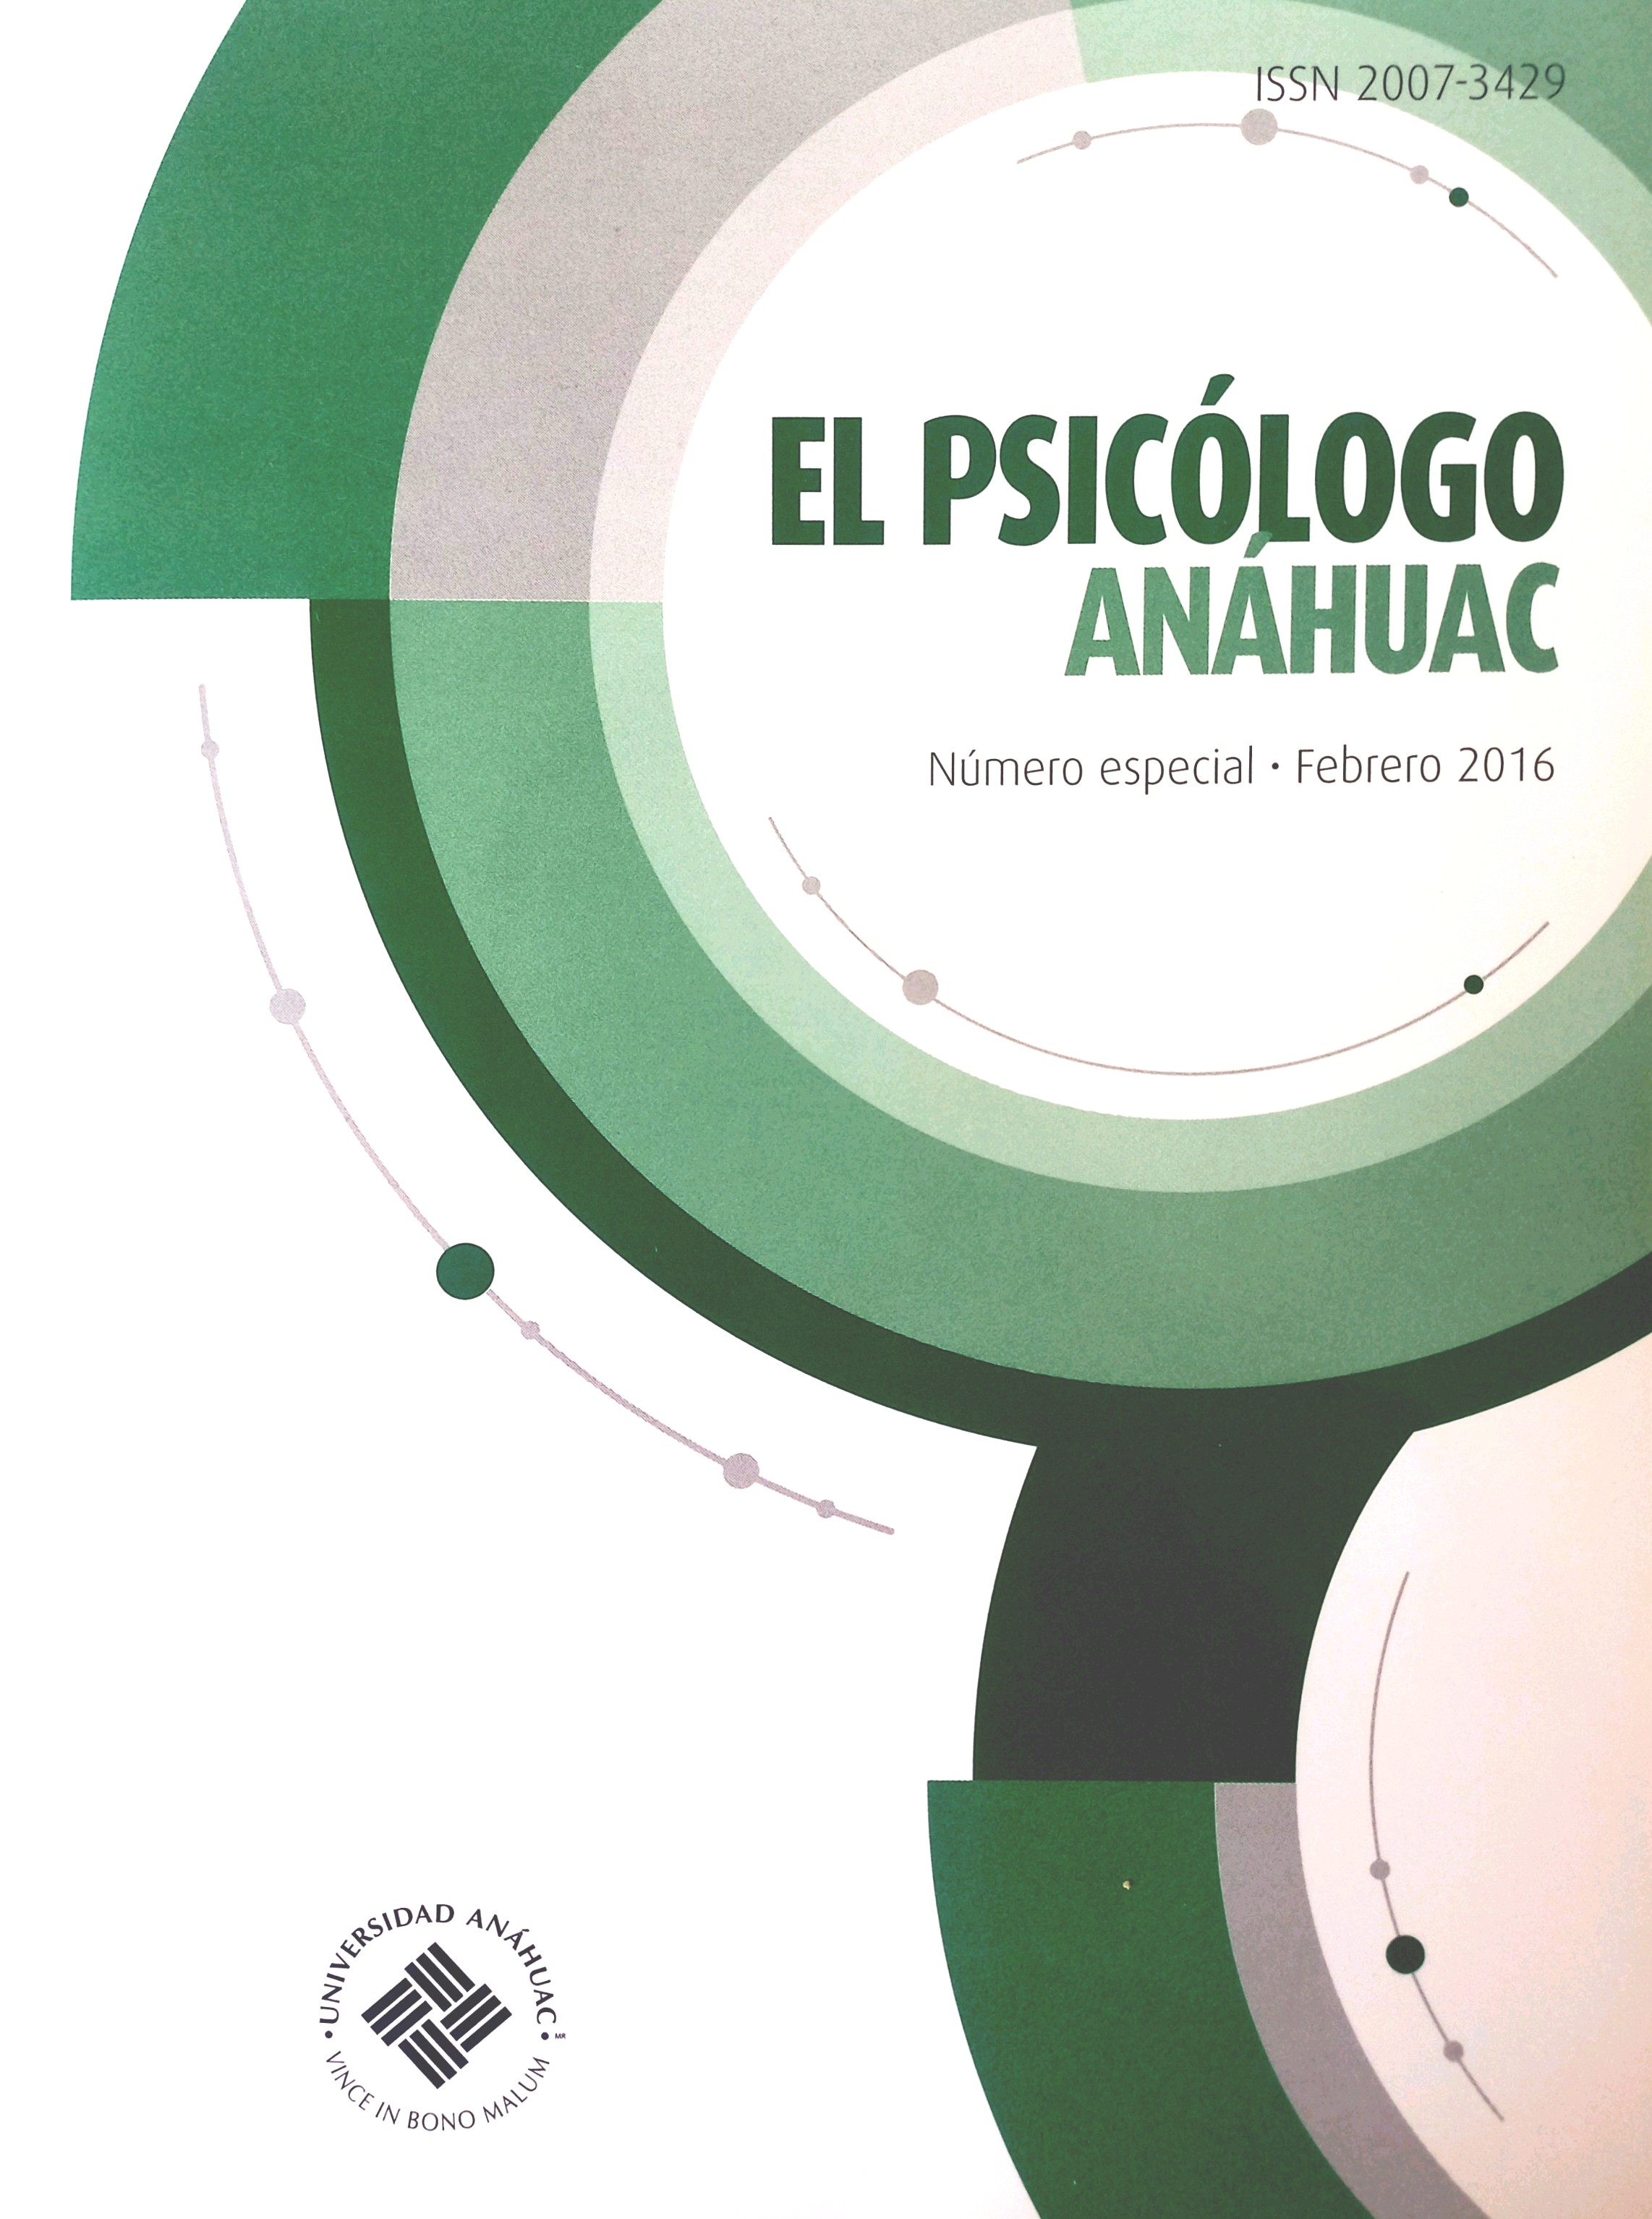 					View Vol. 19 No. 19 (2016): El Psicólogo Anáhuac, Vol. 19 (número especial)
				